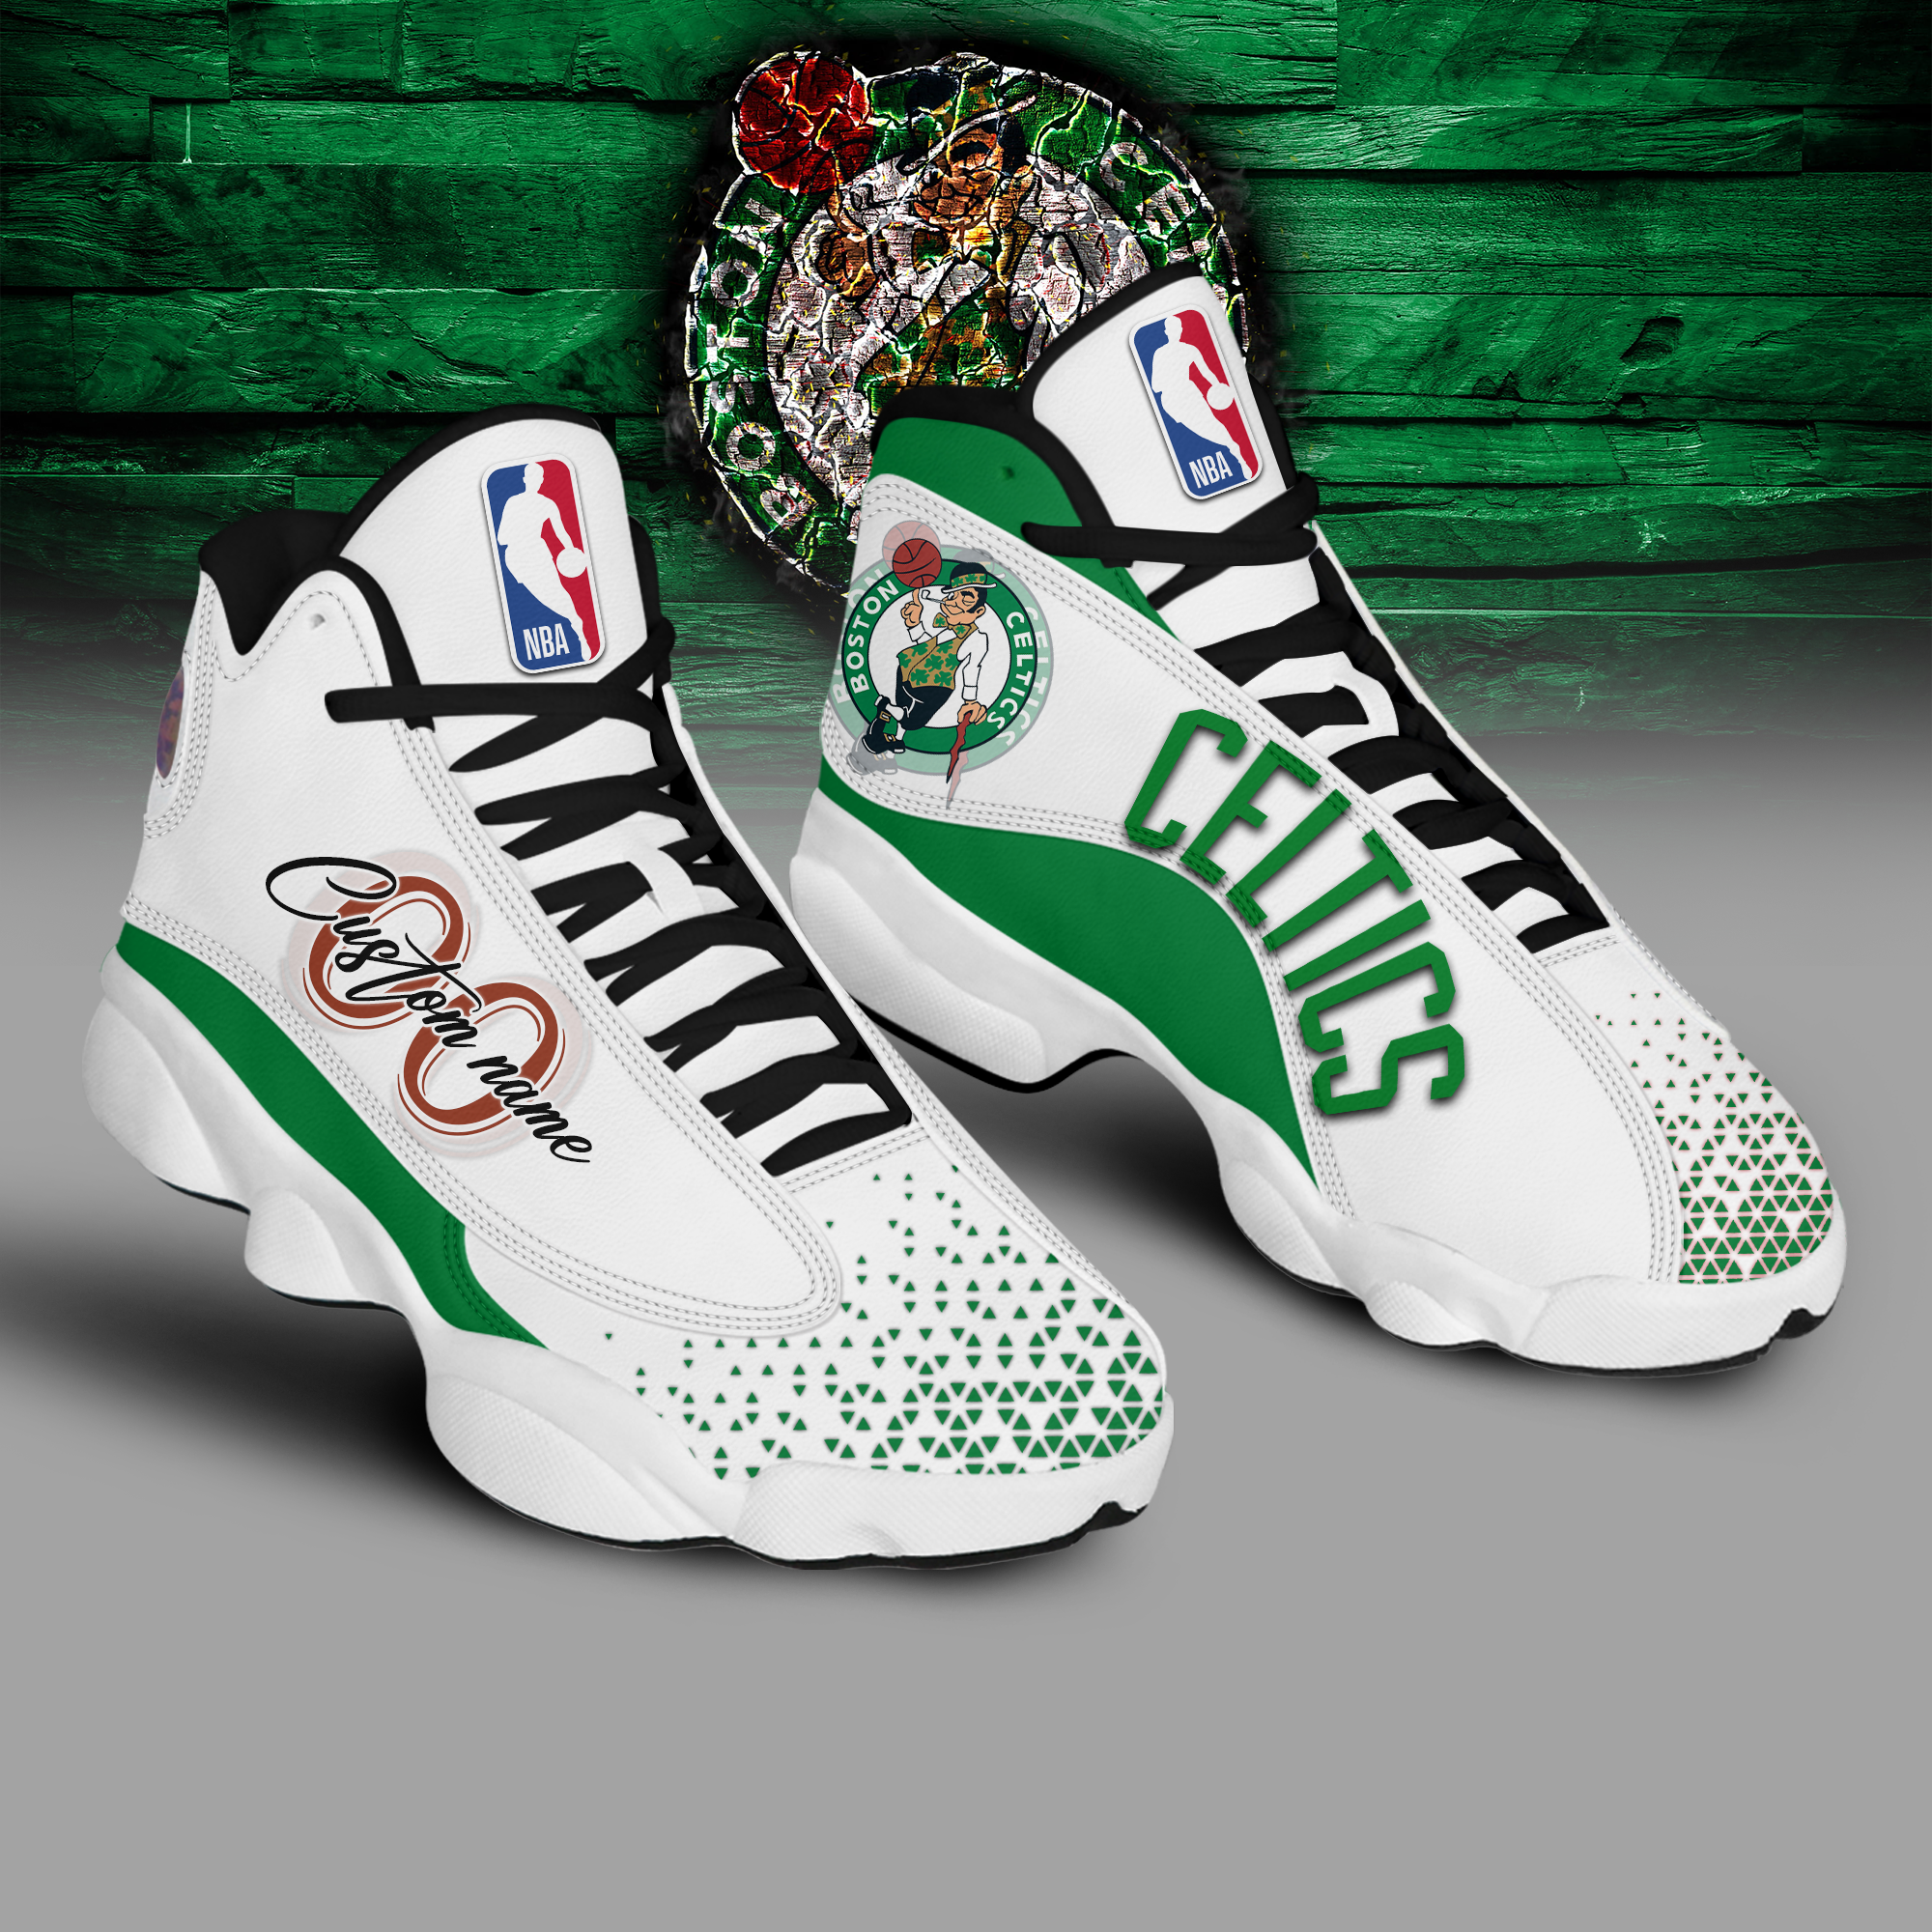 NBA Celtics Jordan Retro 13 Custom Name - BTF Store